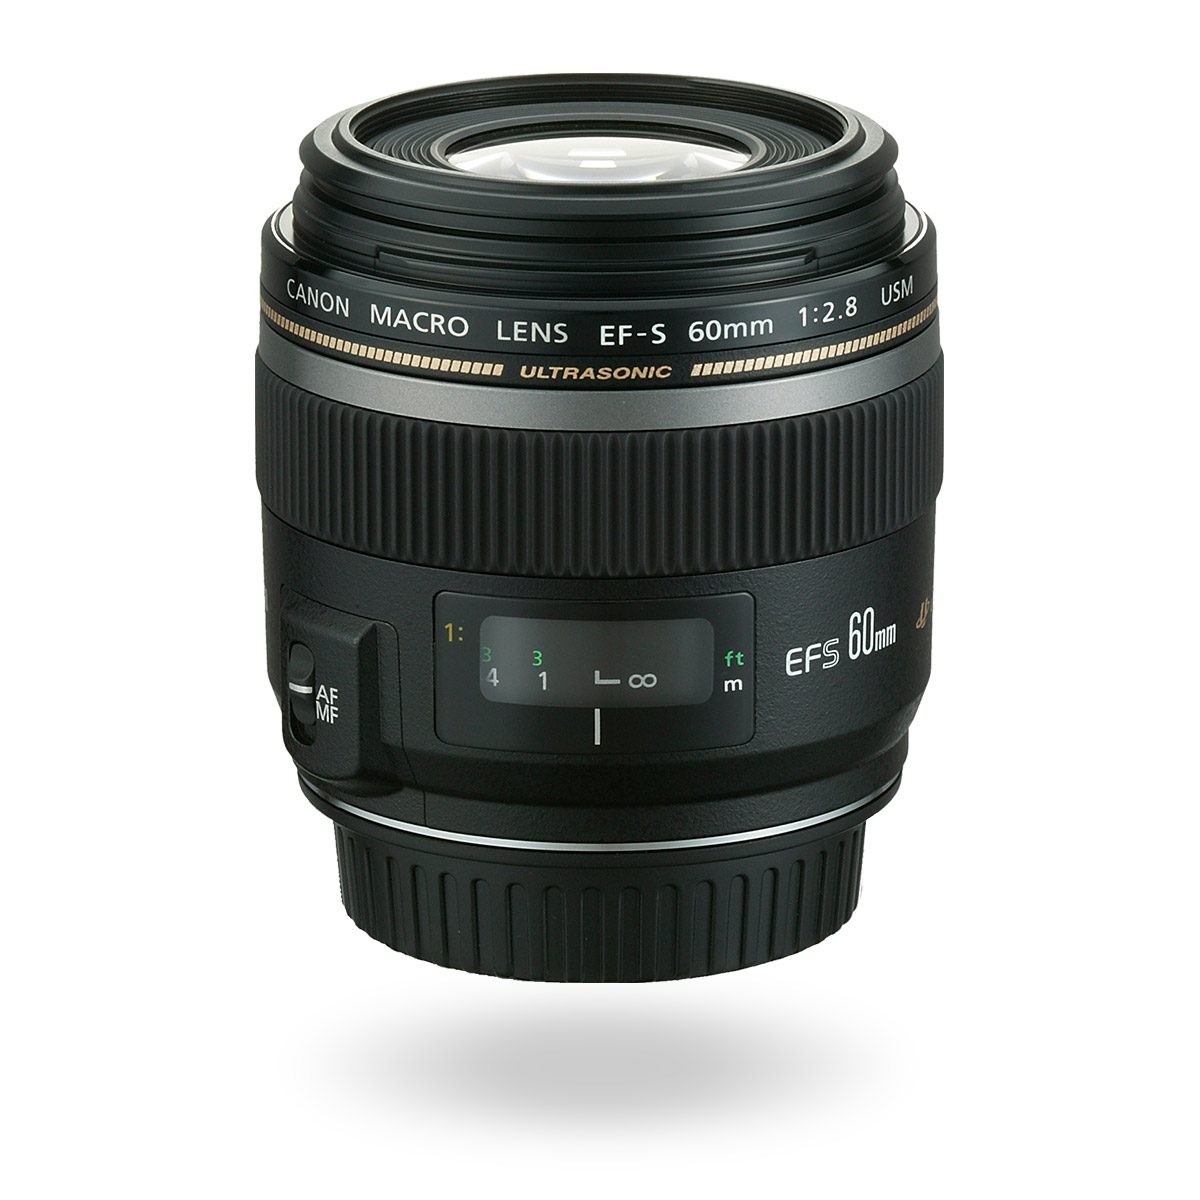 EF-S 60mm f/2.8 Macro USM lens